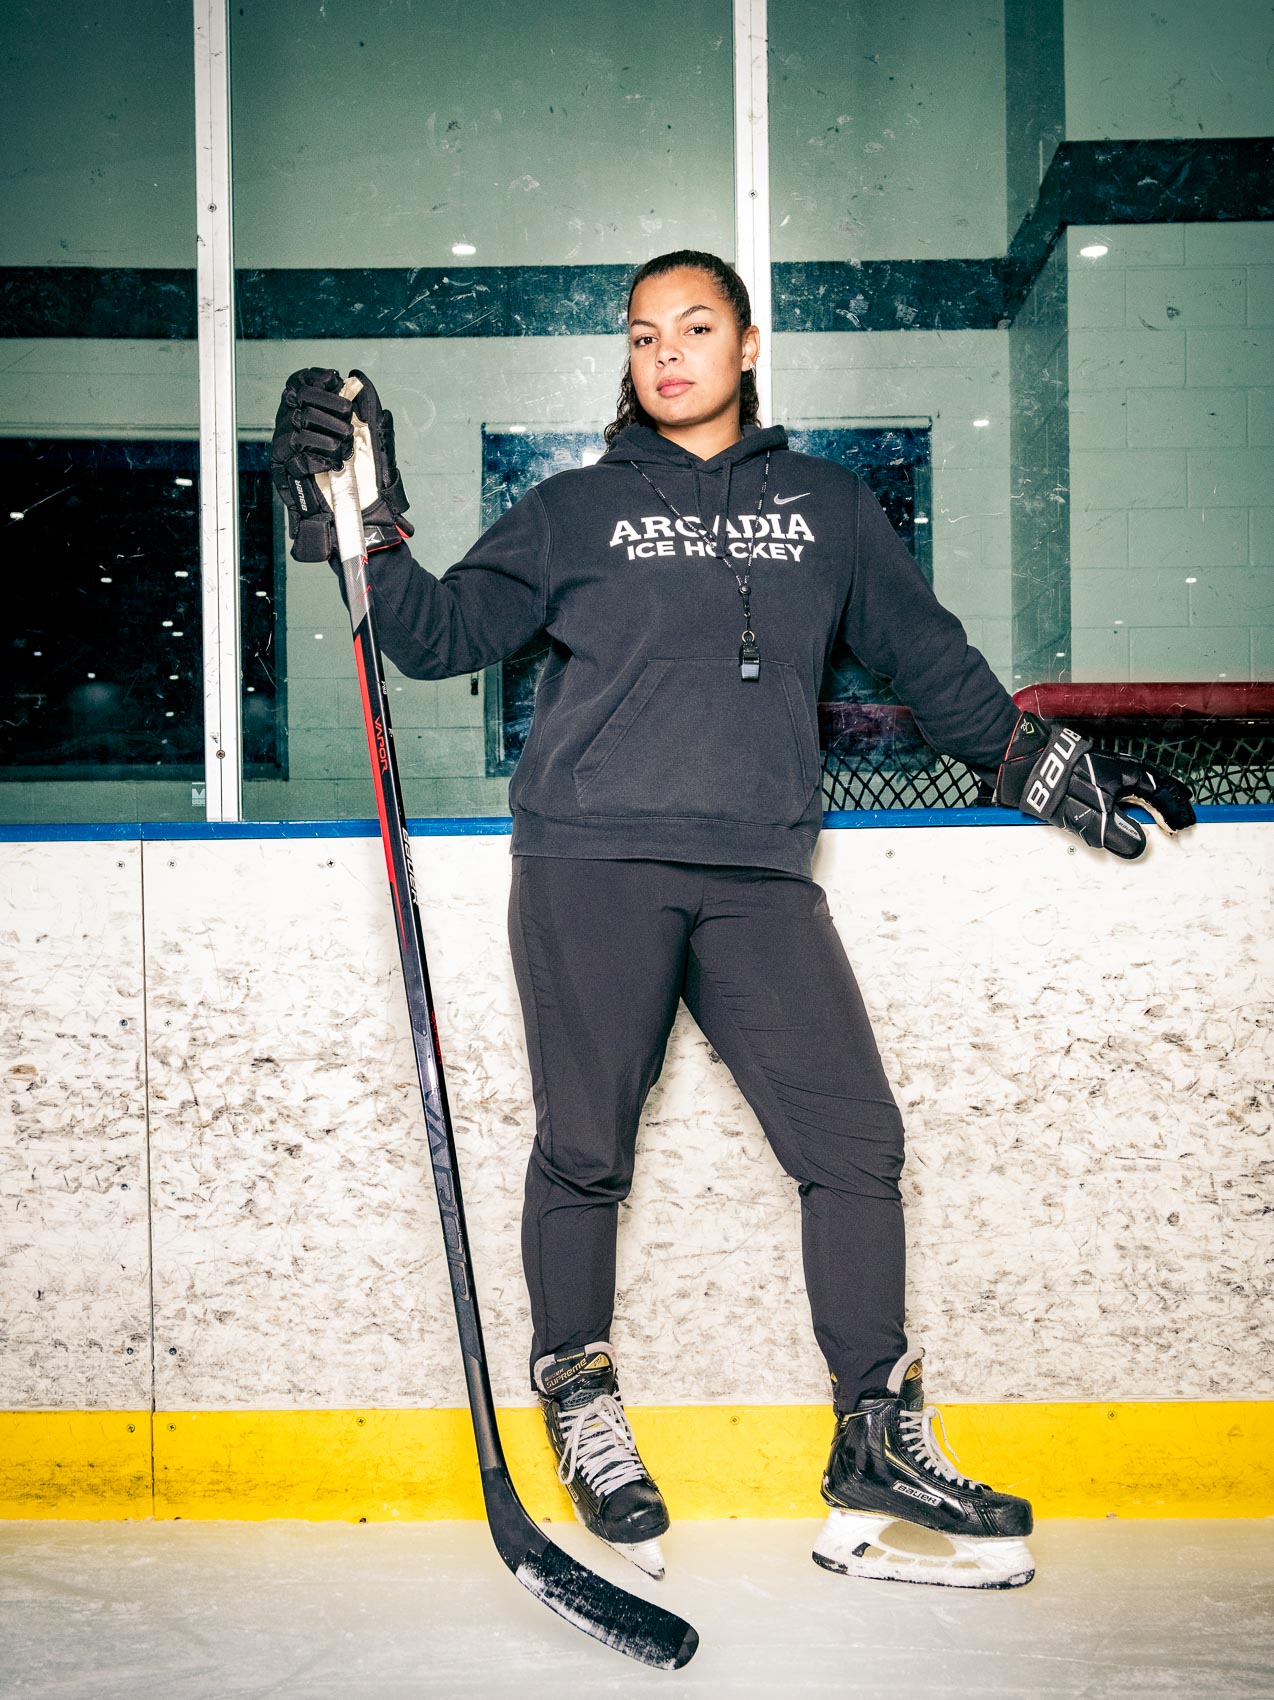 Kelsey Koelzer / Women’s Hockey Coach at Arcadia University